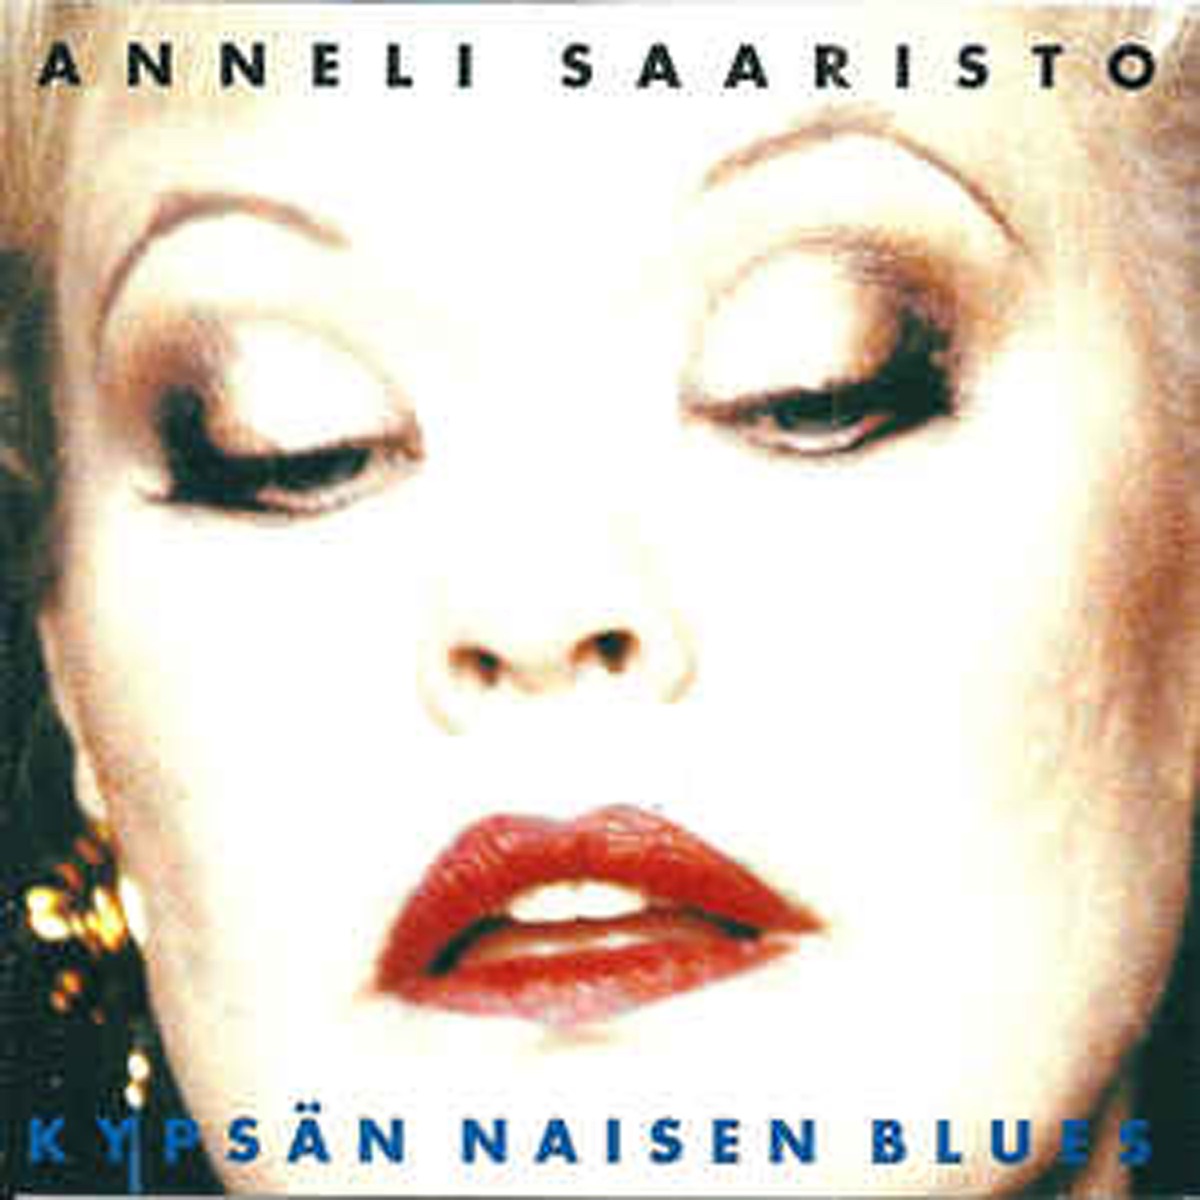 La Dolce Vita - Album by Anneli Saaristo - Apple Music